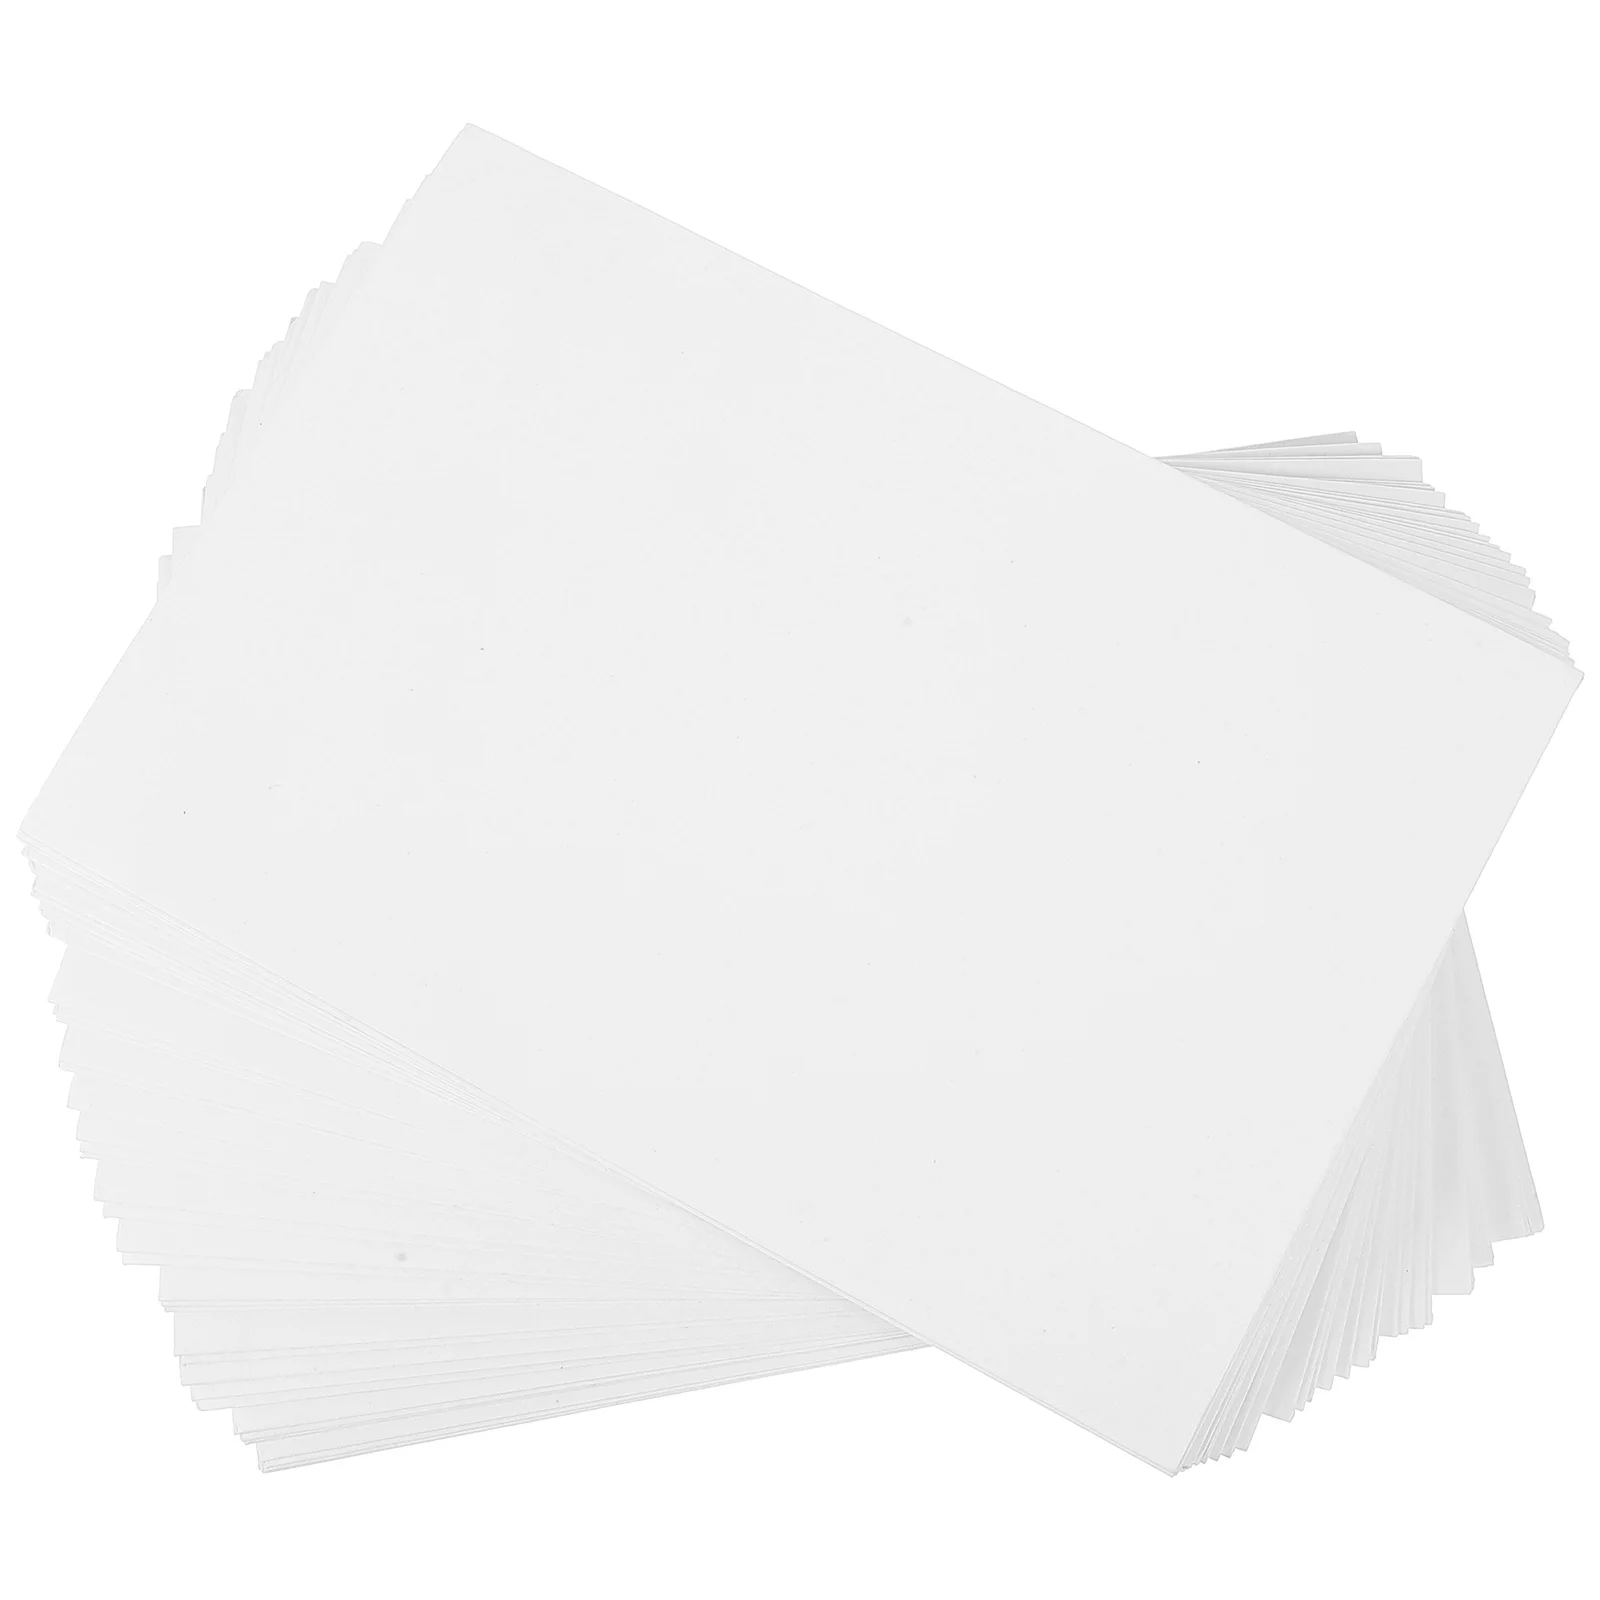 

50 Pcs Self-sealing Blank Envelopes Invitation Cards Greeting Adhesive Multi-function Paper Wedding Practical Student